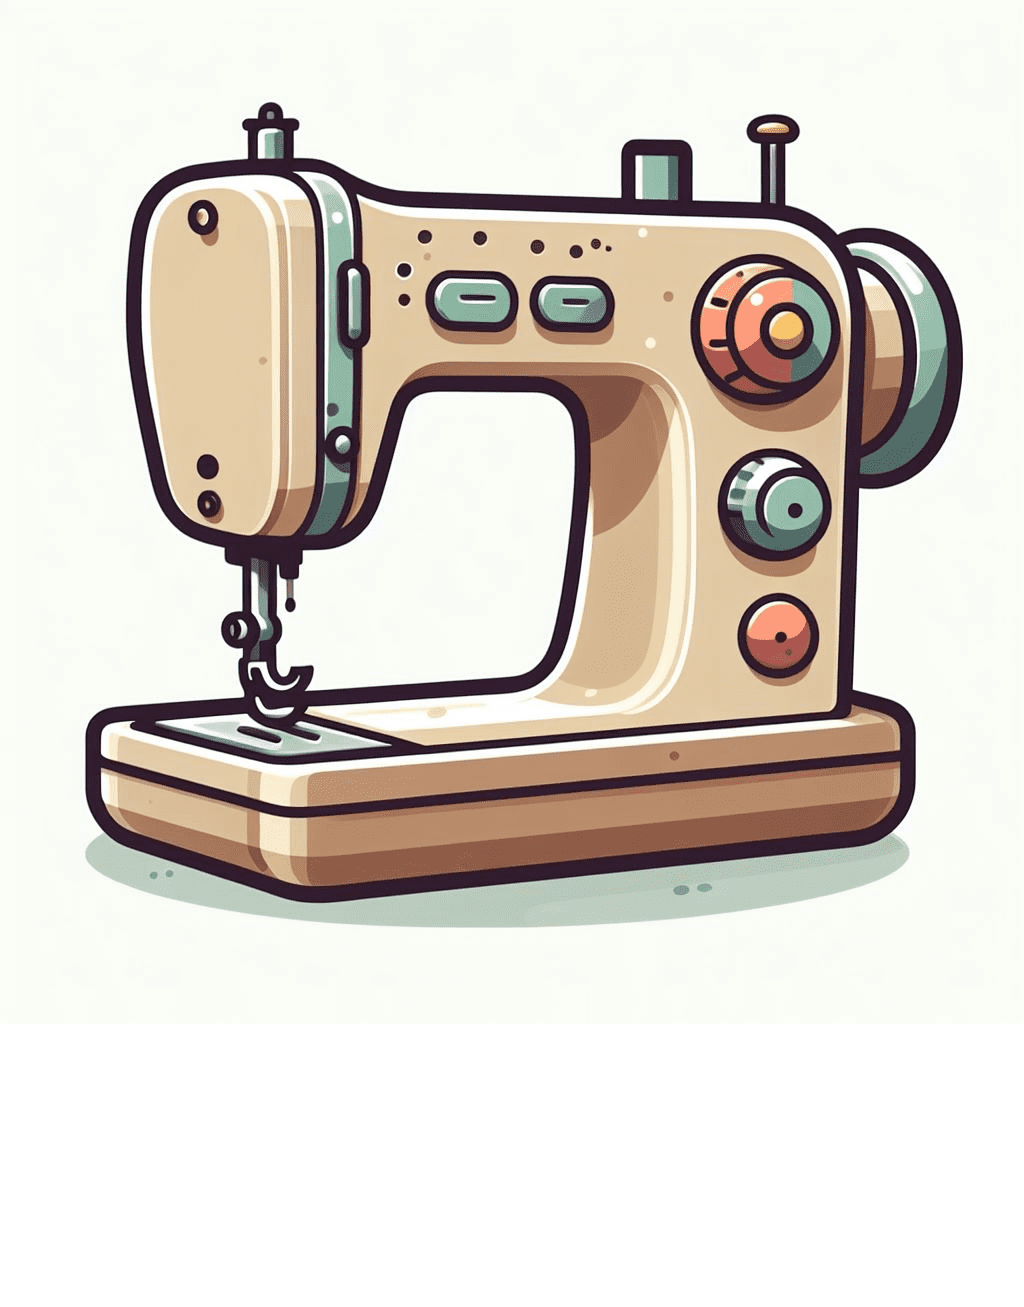 Beautiful Sewing Machine Image Clipart